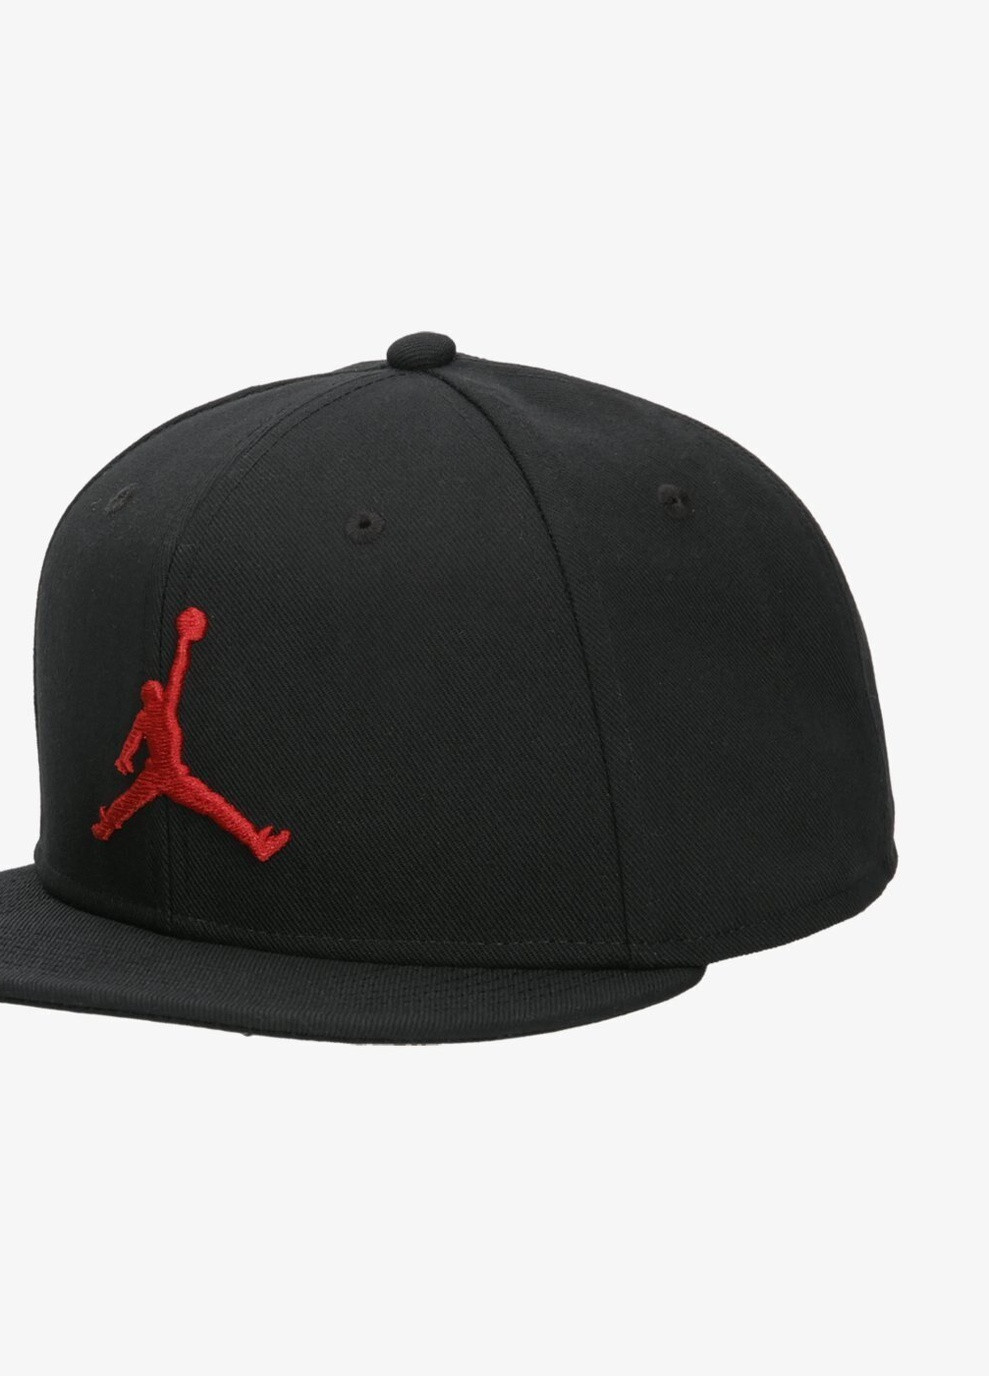 Кепка Pro Jumpman Snapback Hat One Size black AR2118-010 Jordan (256501290)